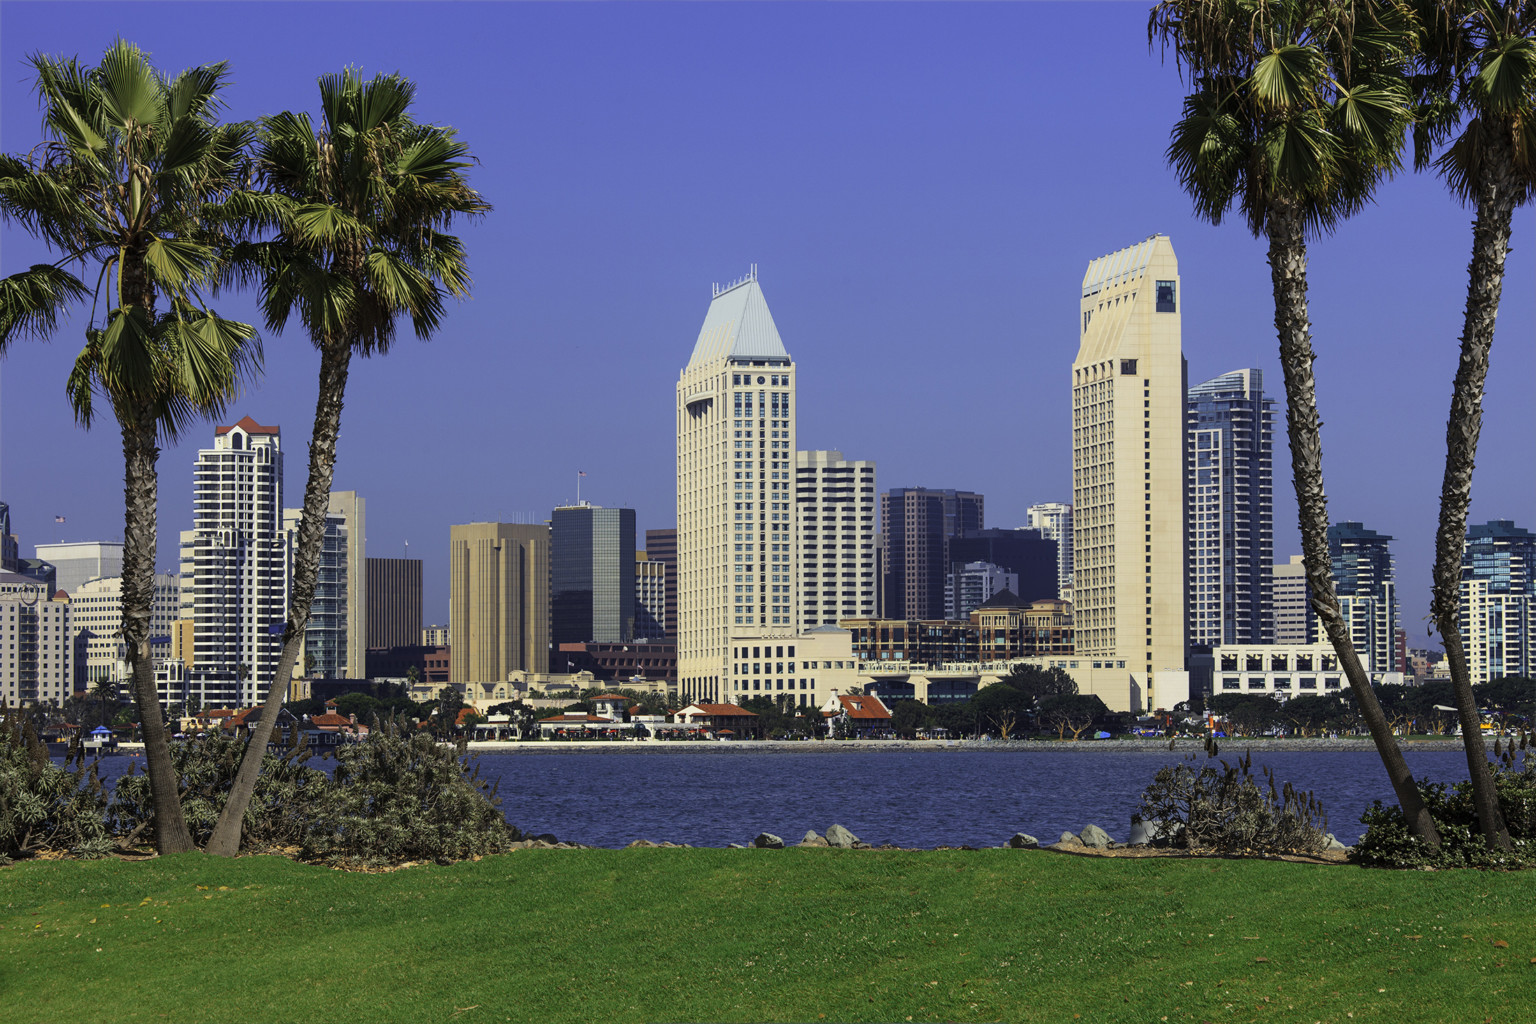 San Diego, California cityscape